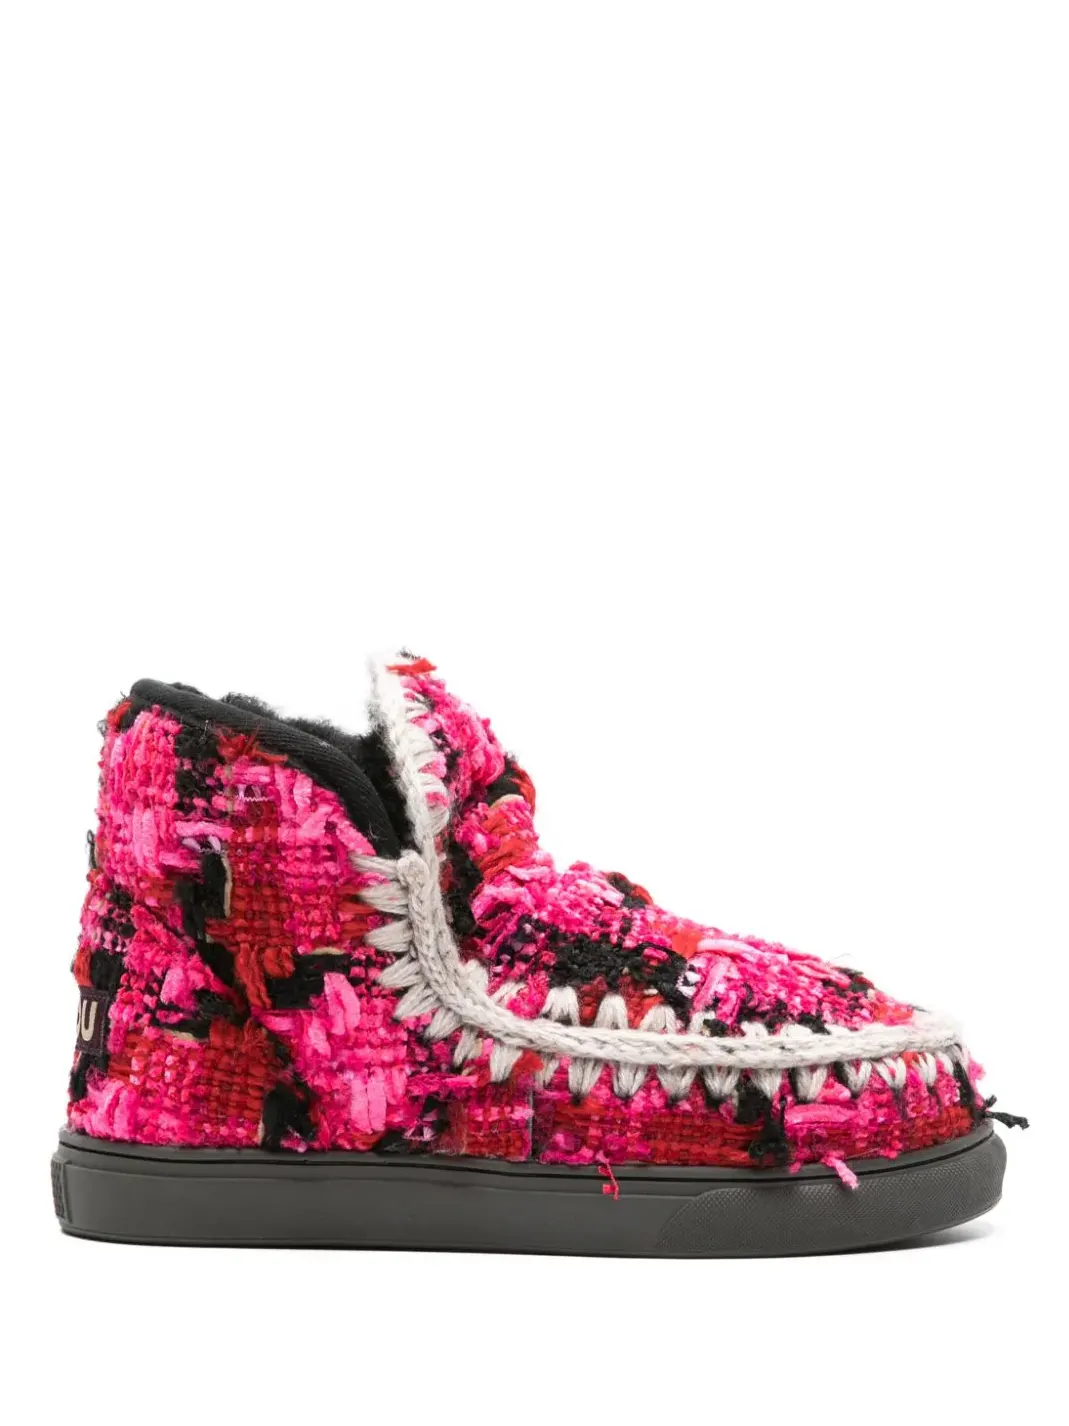 Eskimo Sneaker boots, pink tartan